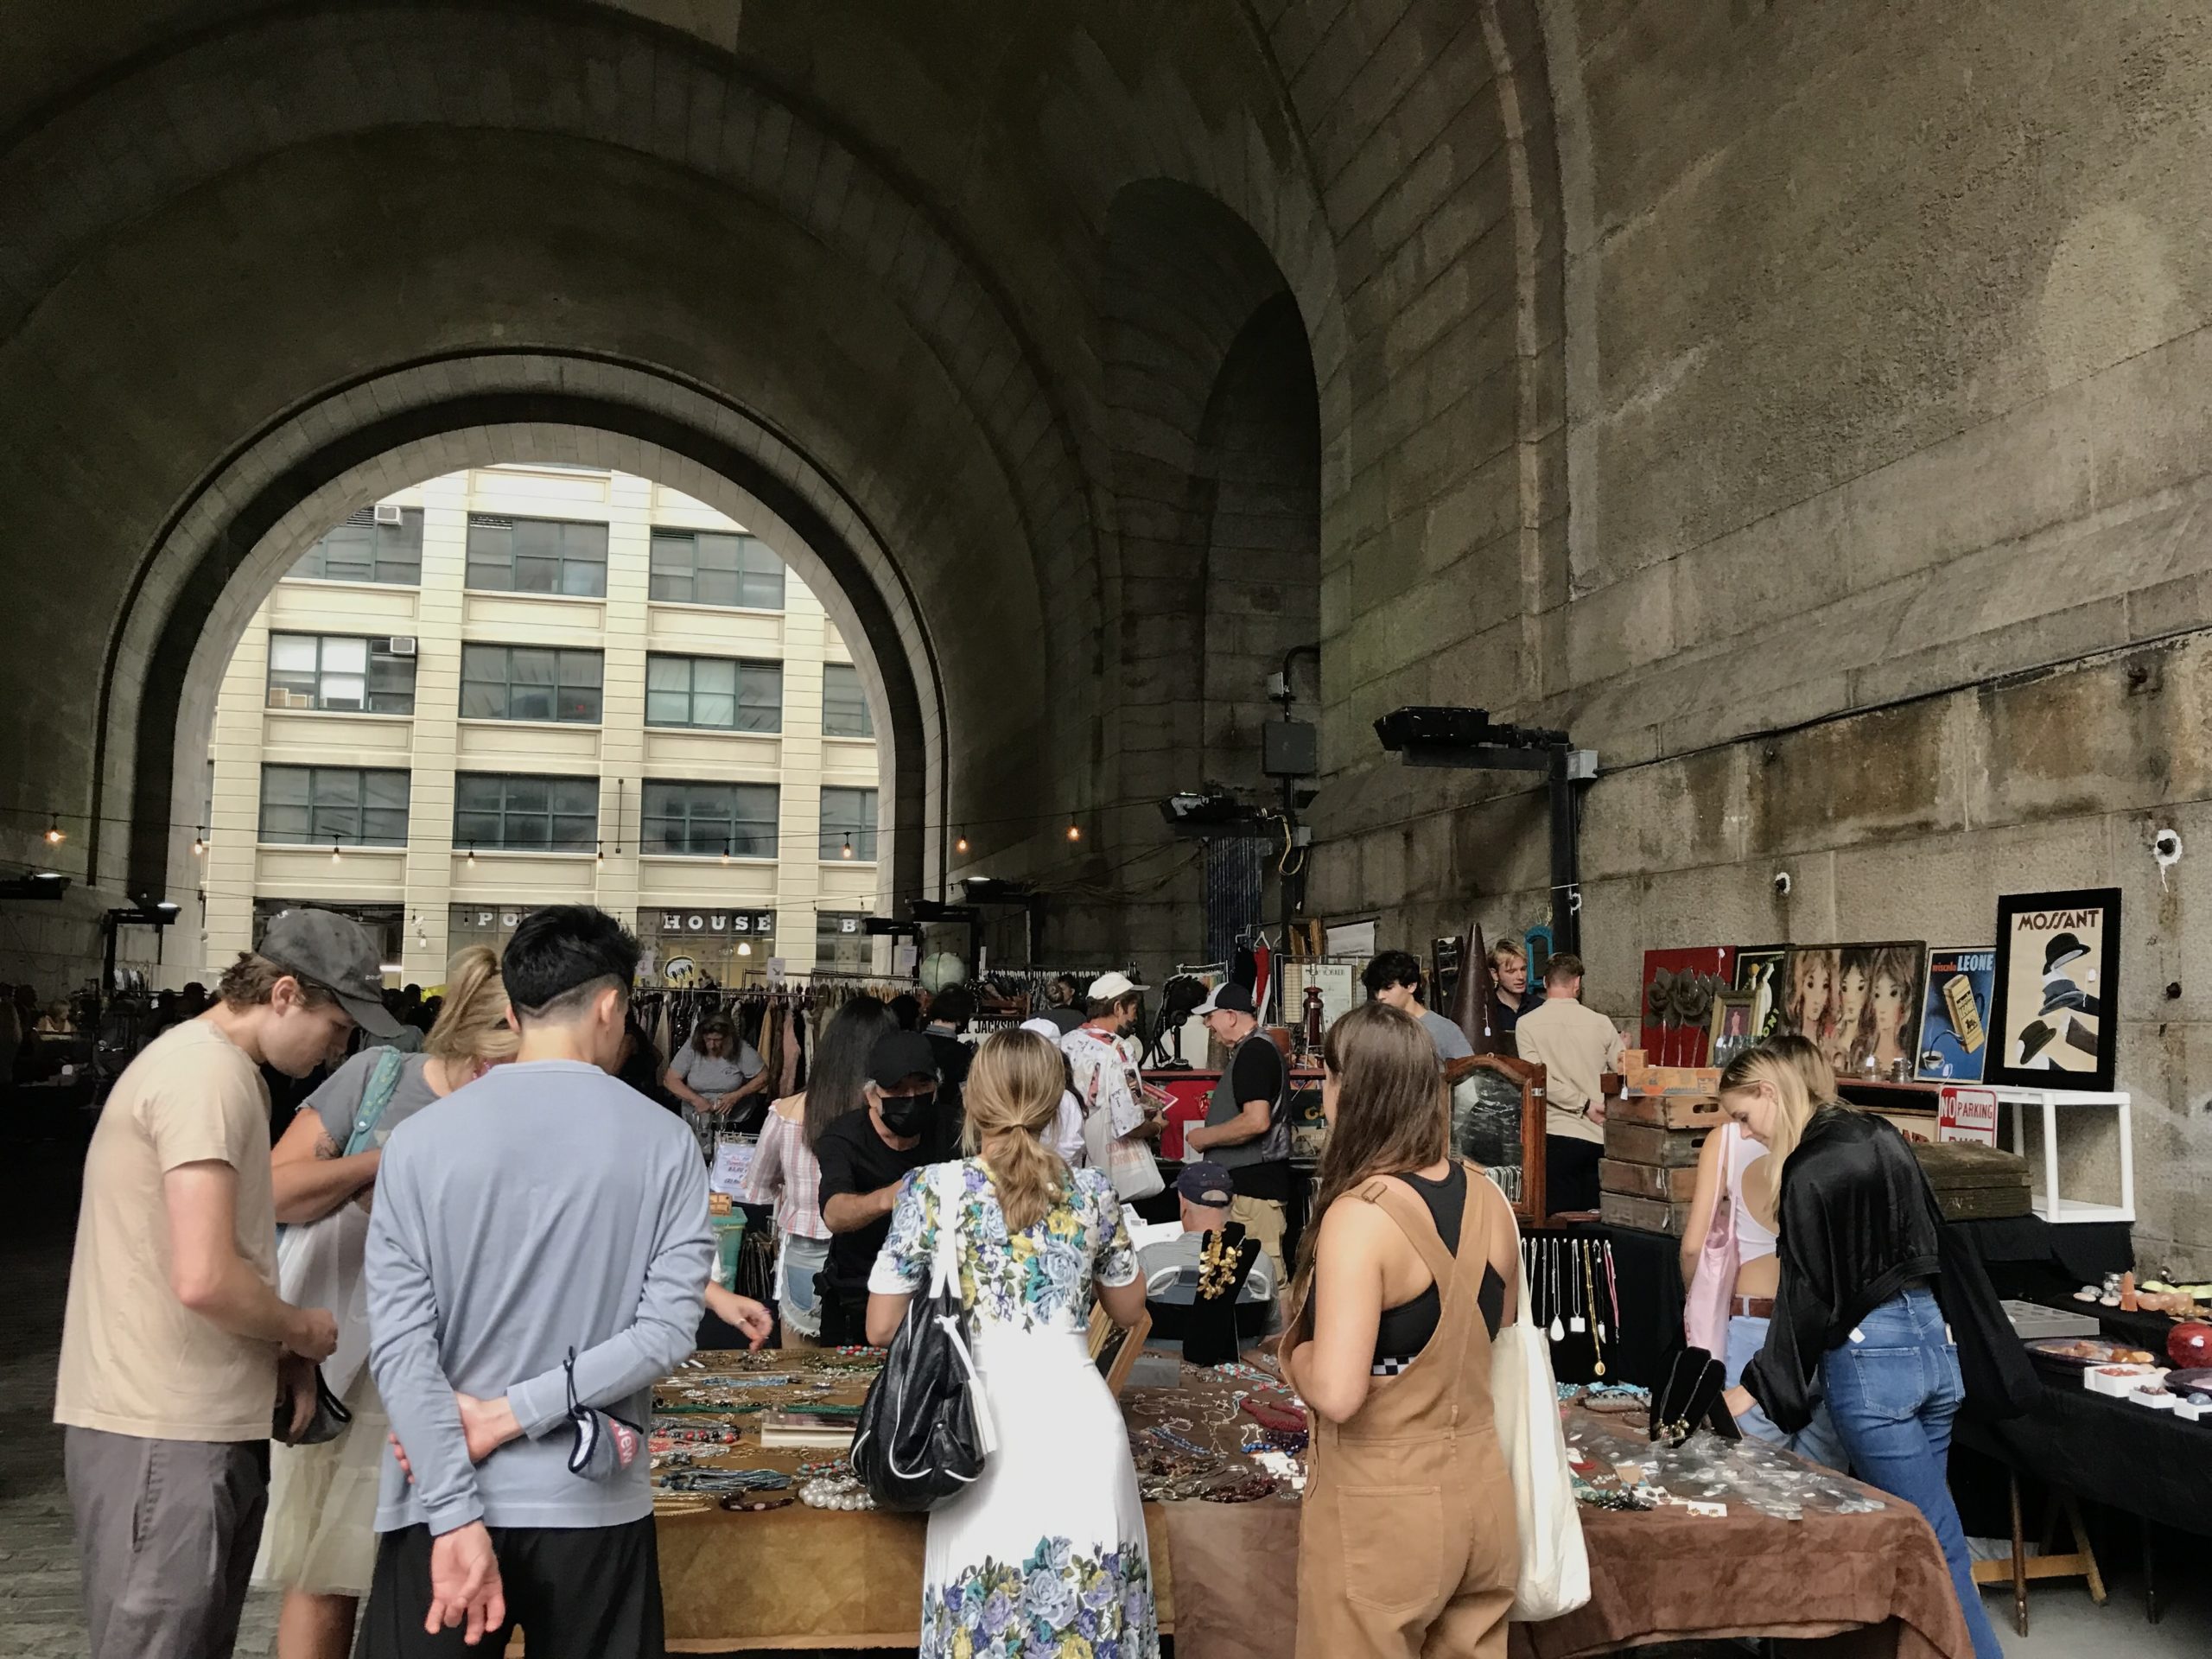 Brooklyn Flea, a market held under the Manhattan Bridge in Dumbo.